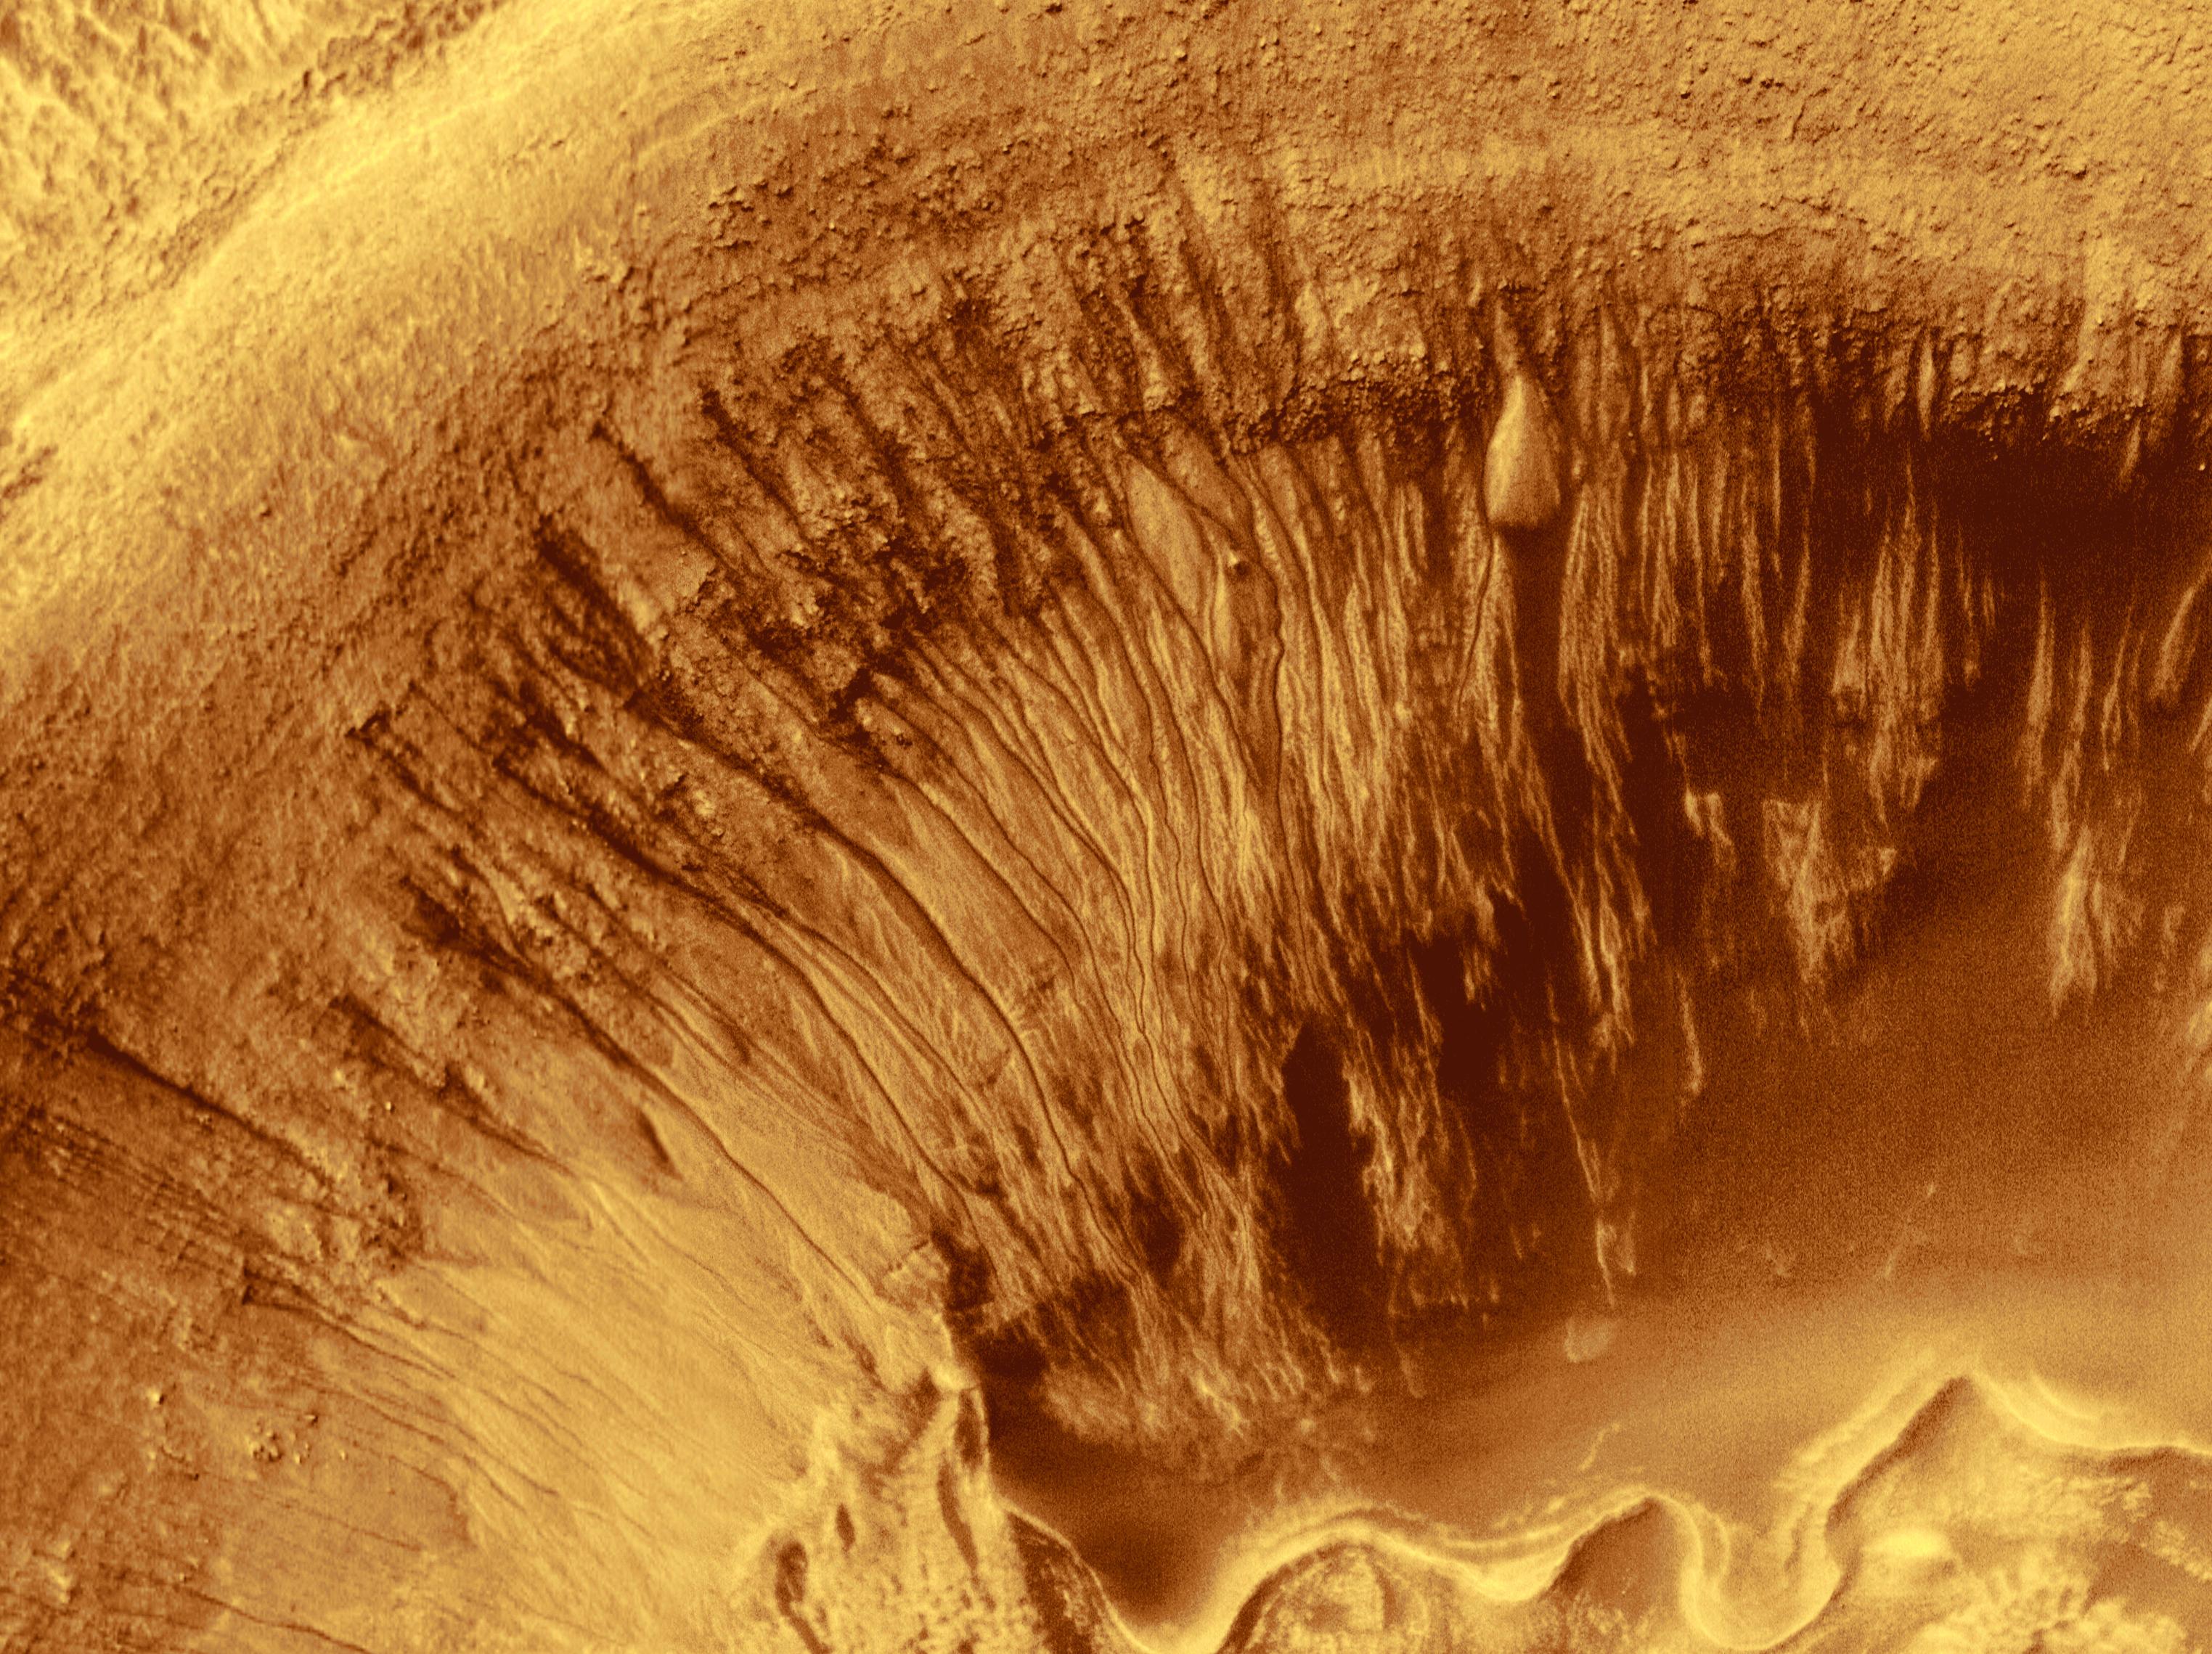 Mars cratere